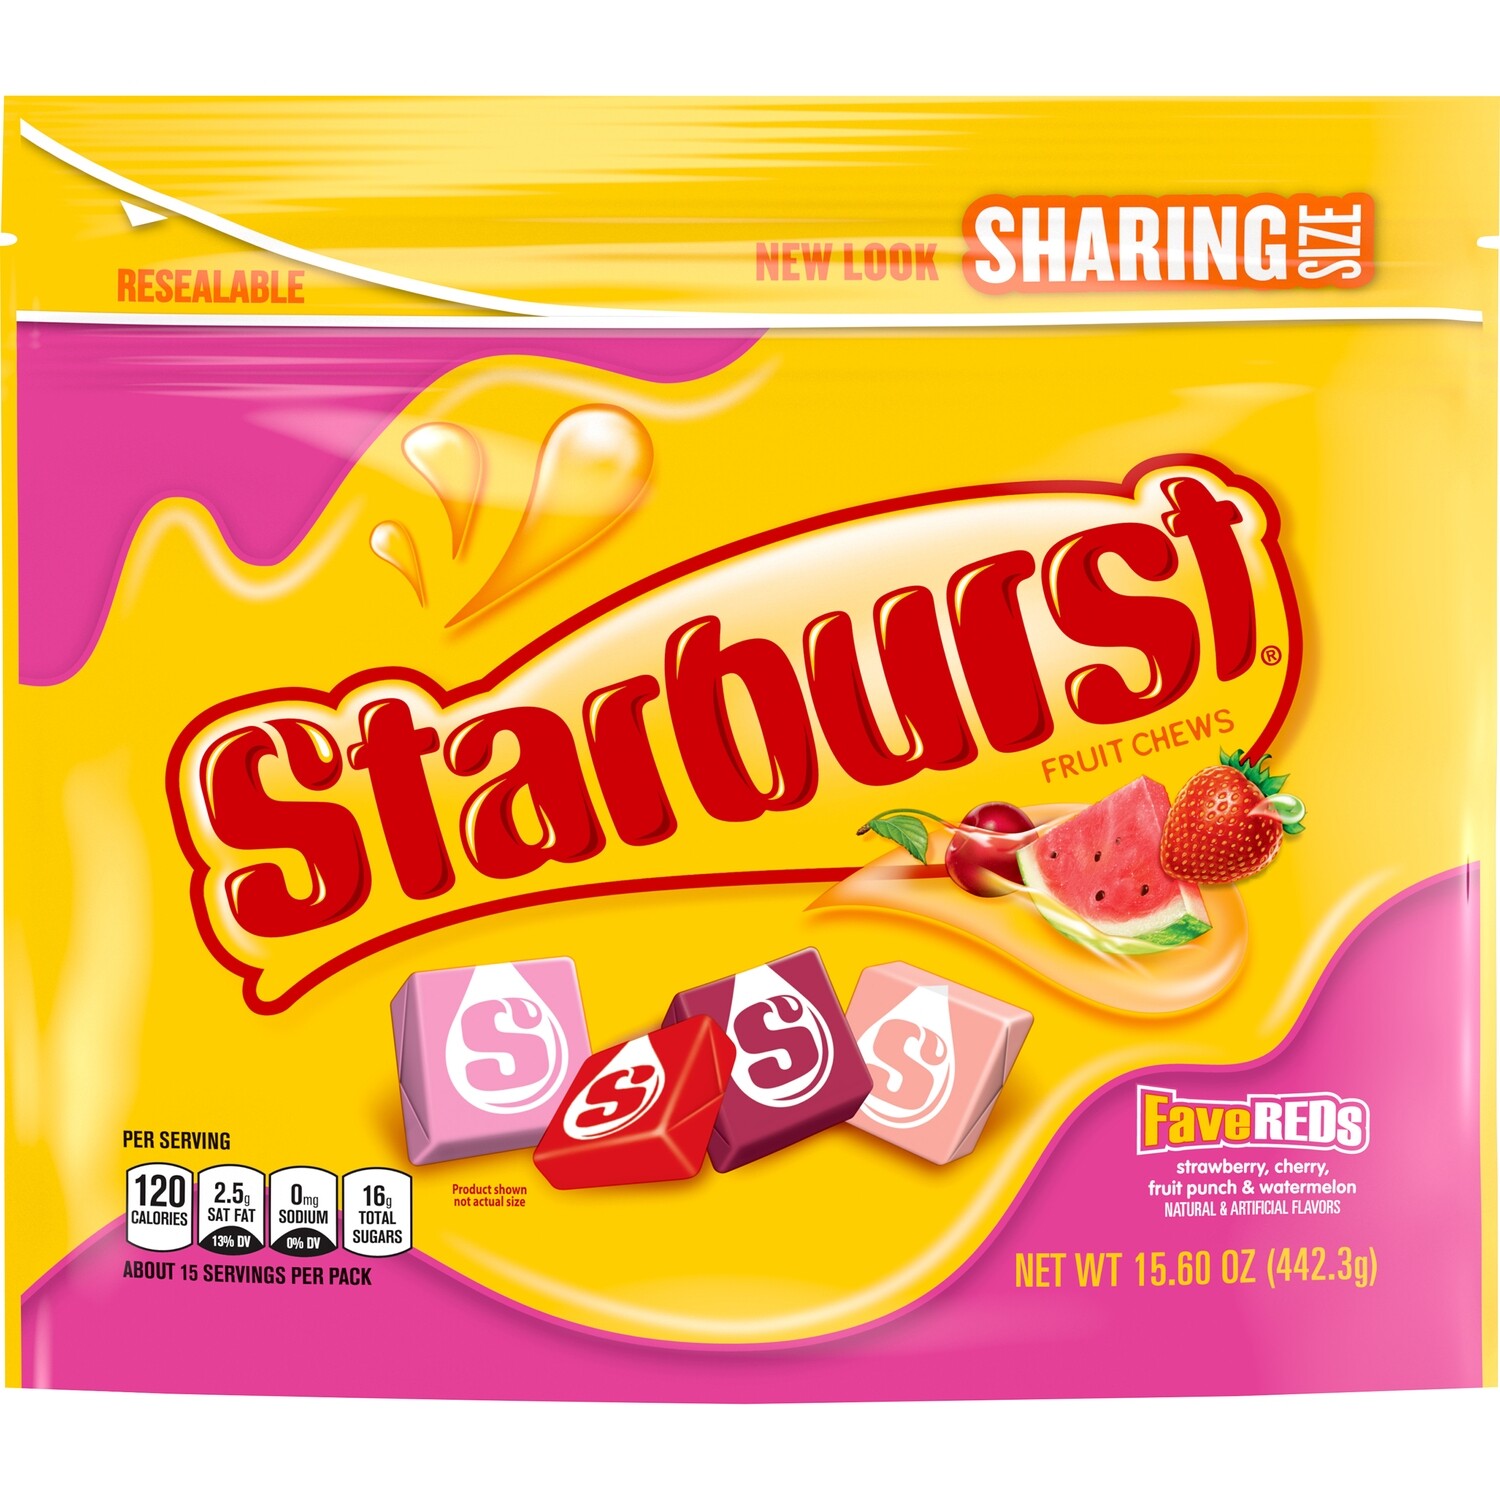 Share Pack Starburst FaveREDS